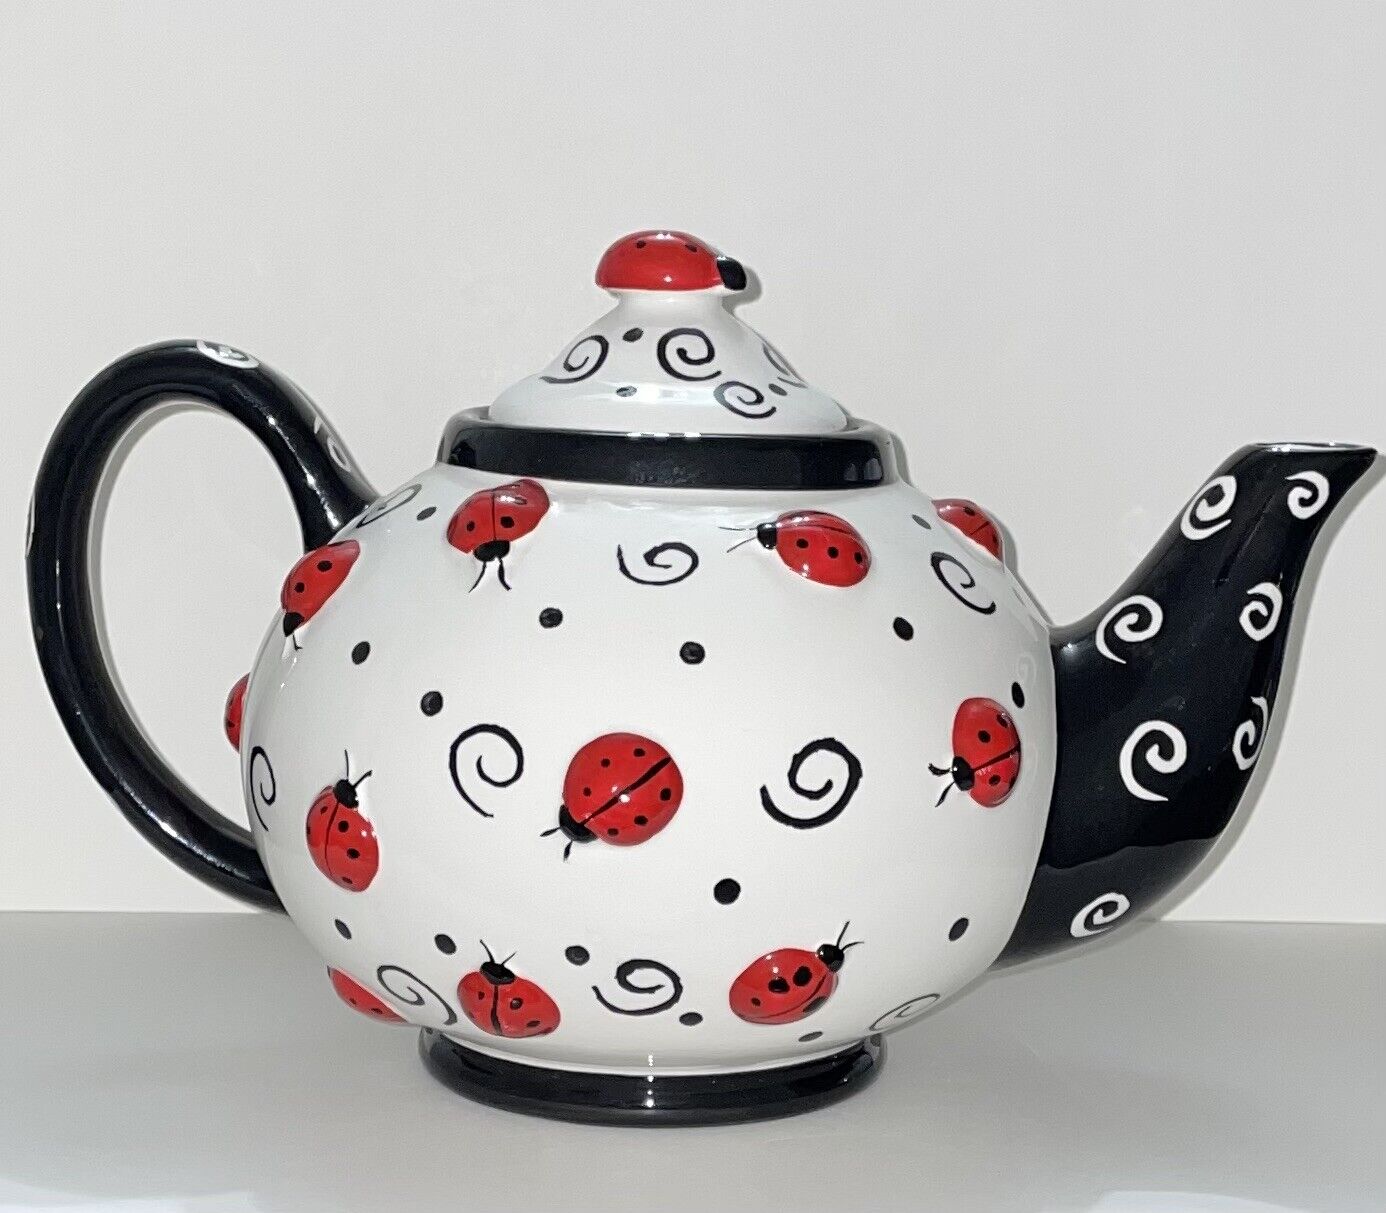 Burton & Burton Ladybug Teapot Red White Black with Swirls